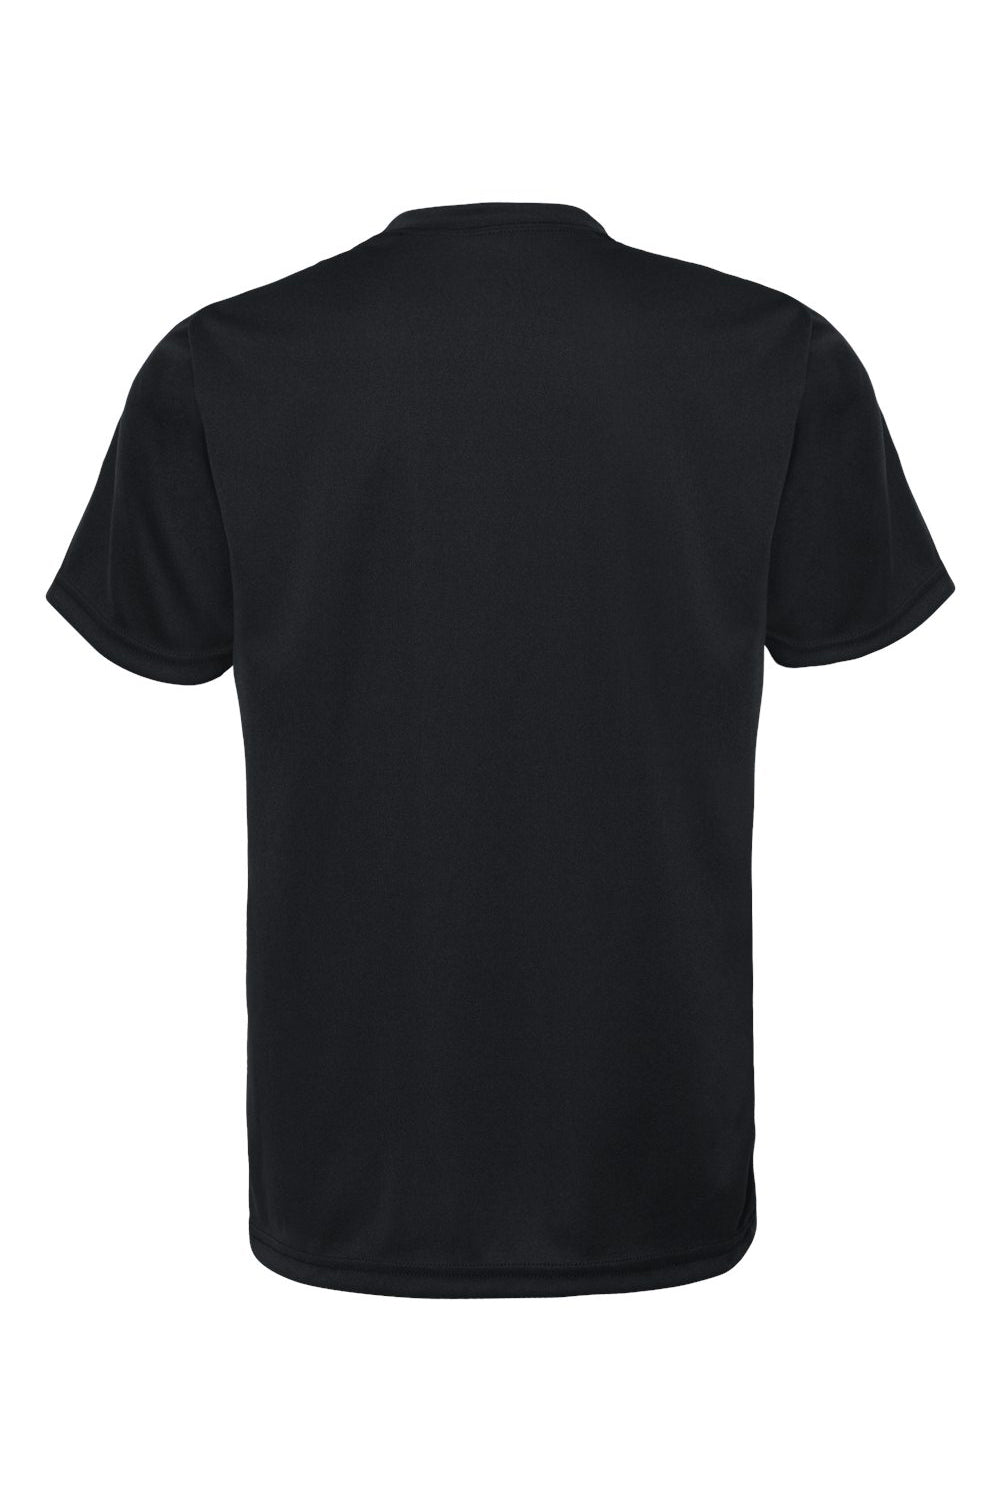 C2 Sport 5200 Youth Performance Moisture Wicking Short Sleeve Crewneck T-Shirt Black Flat Back